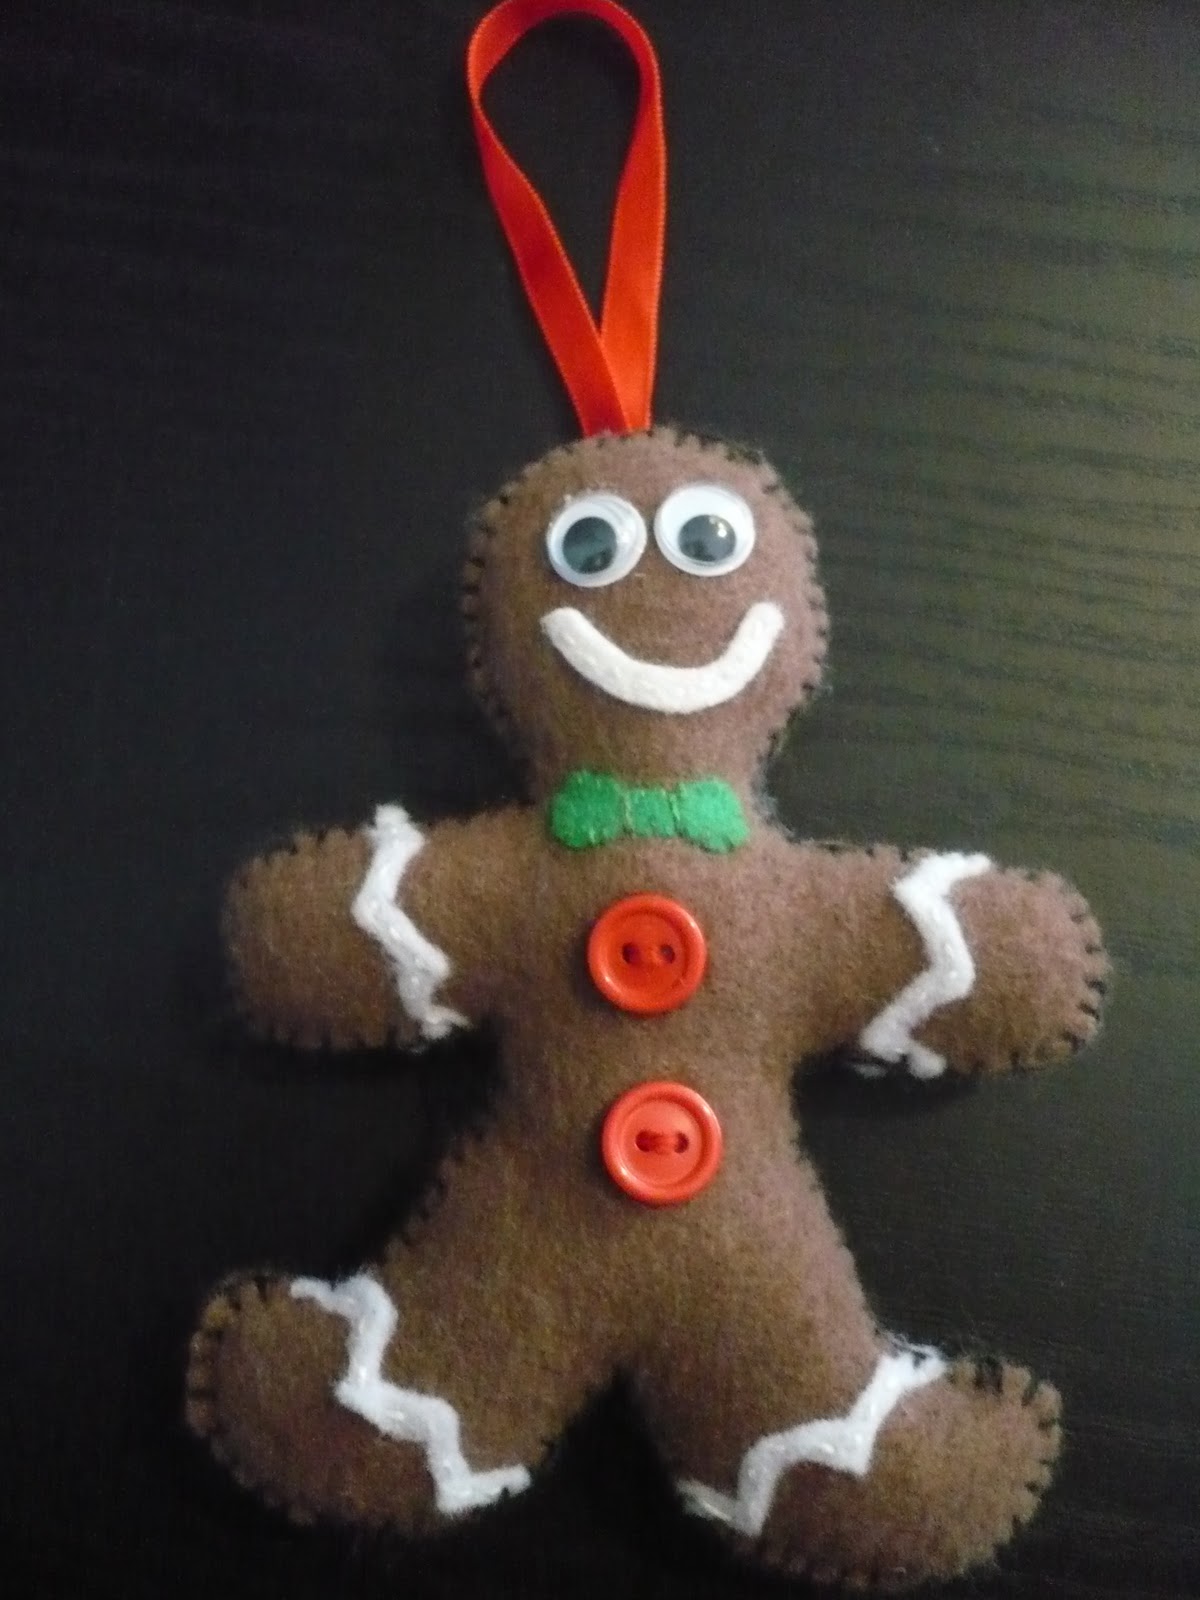 http://3.bp.blogspot.com/_ZtCD_ybppmM/TO1ft8KPqKI/AAAAAAAAAXw/OsrLzNu1oFI/s1600/gingerbread+man+ornament.JPG